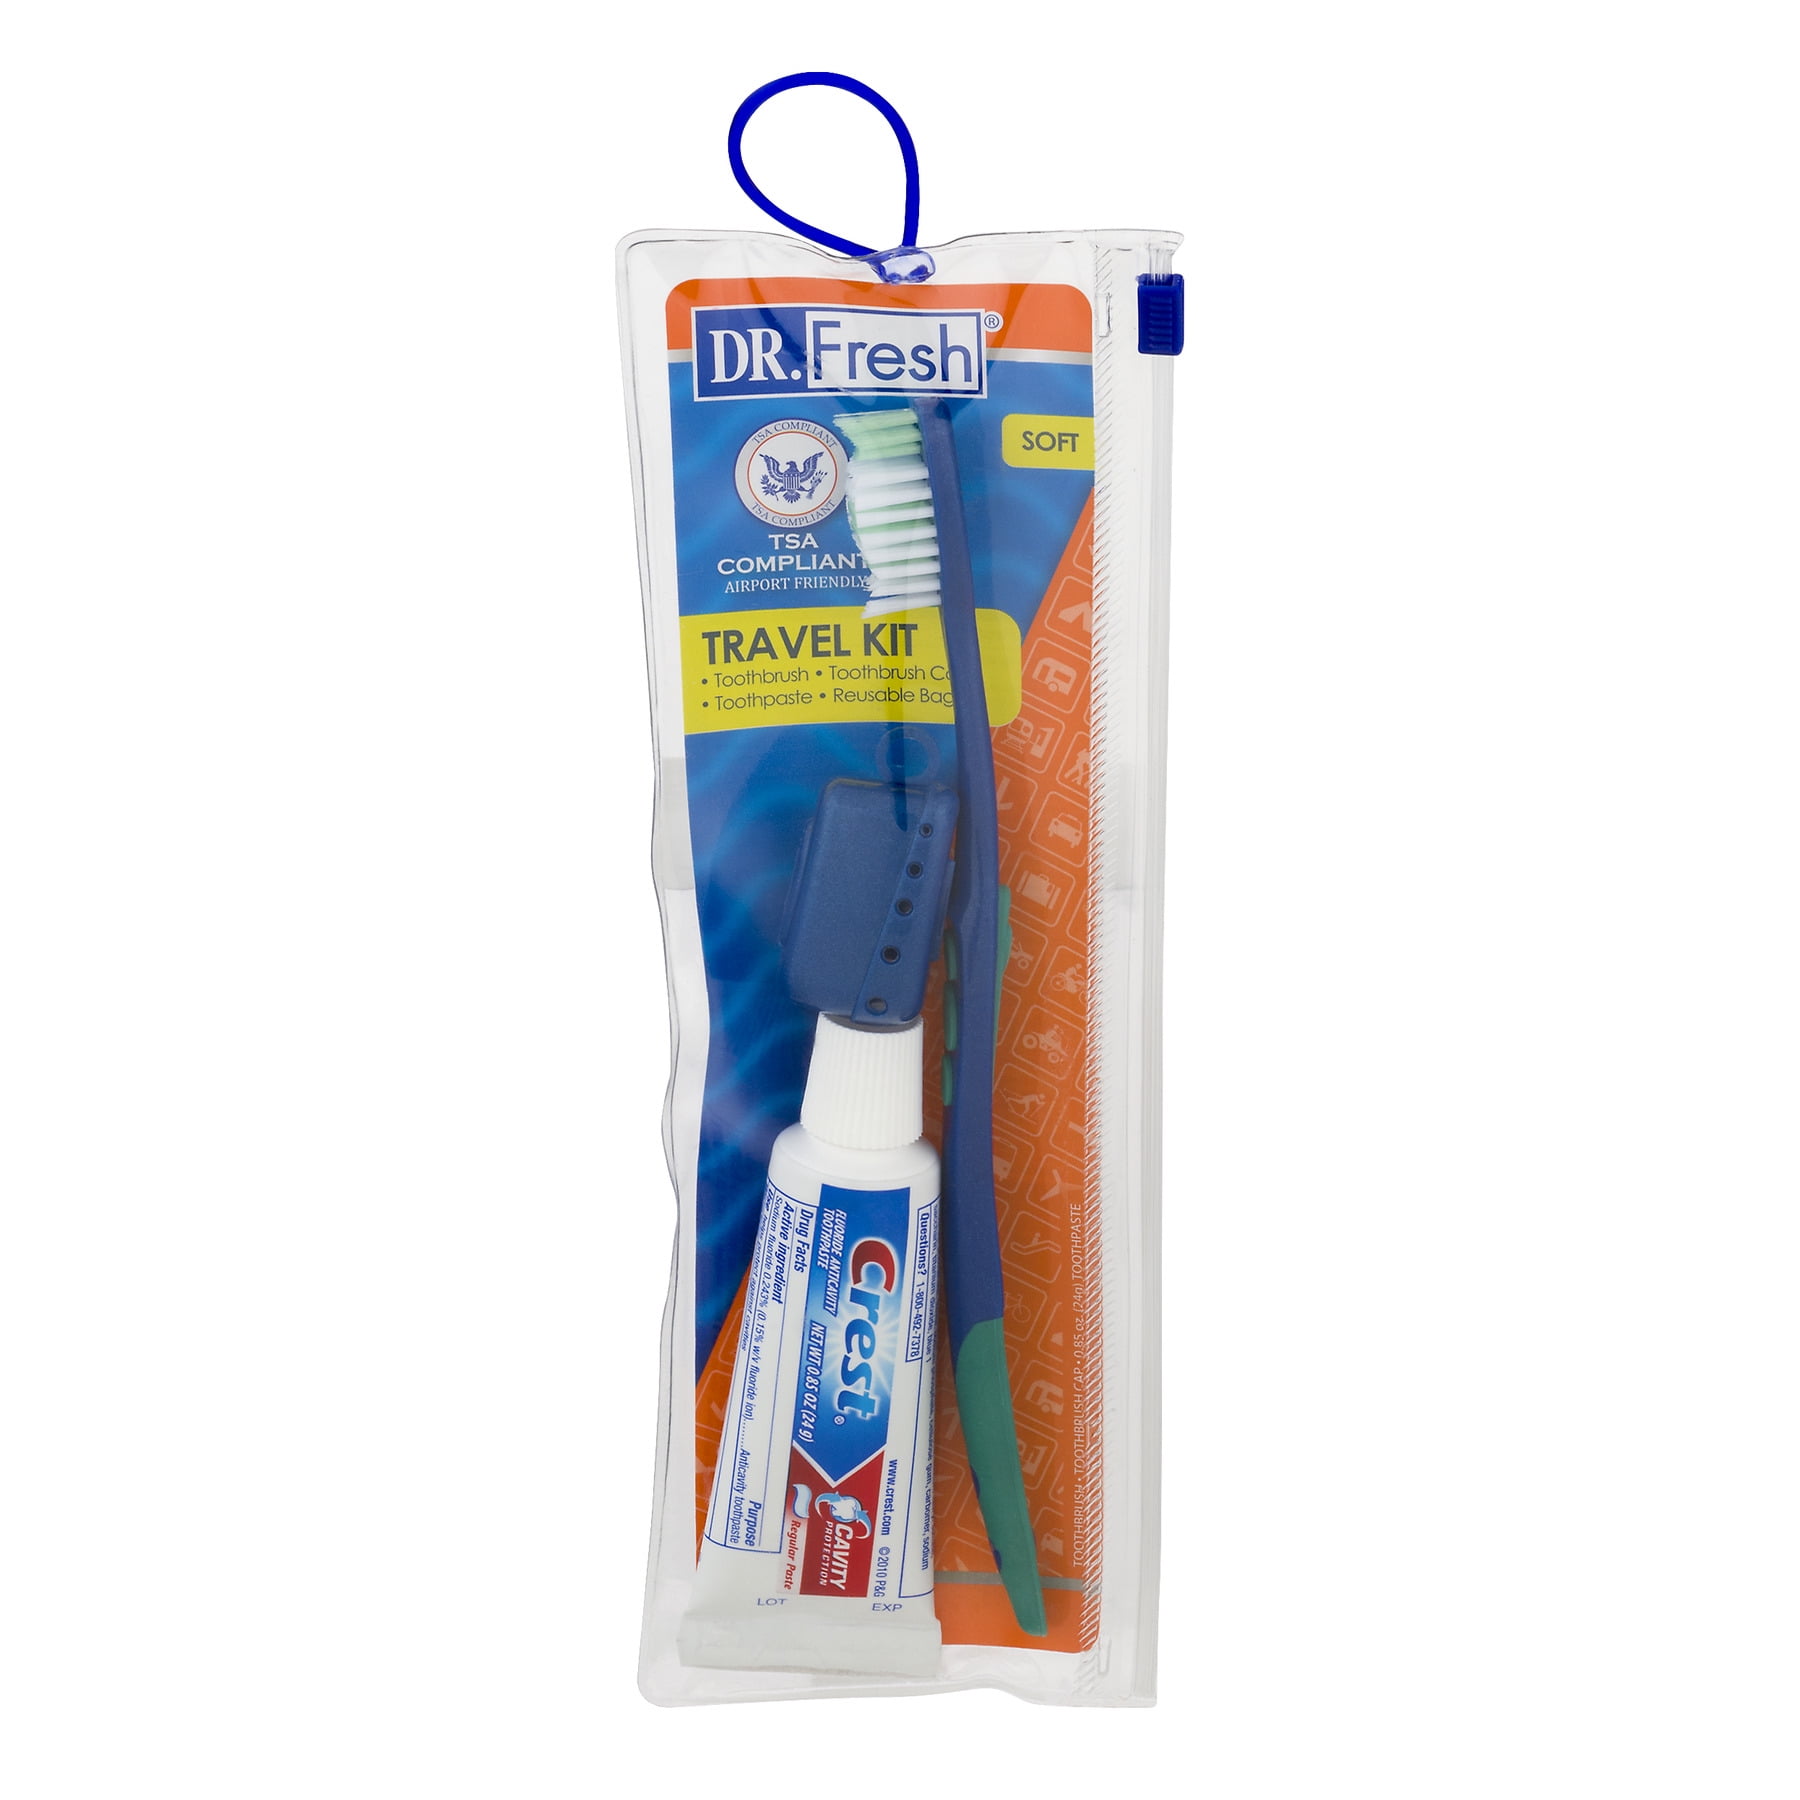 DR. Fresh Soft Toothbrush Travel Kit